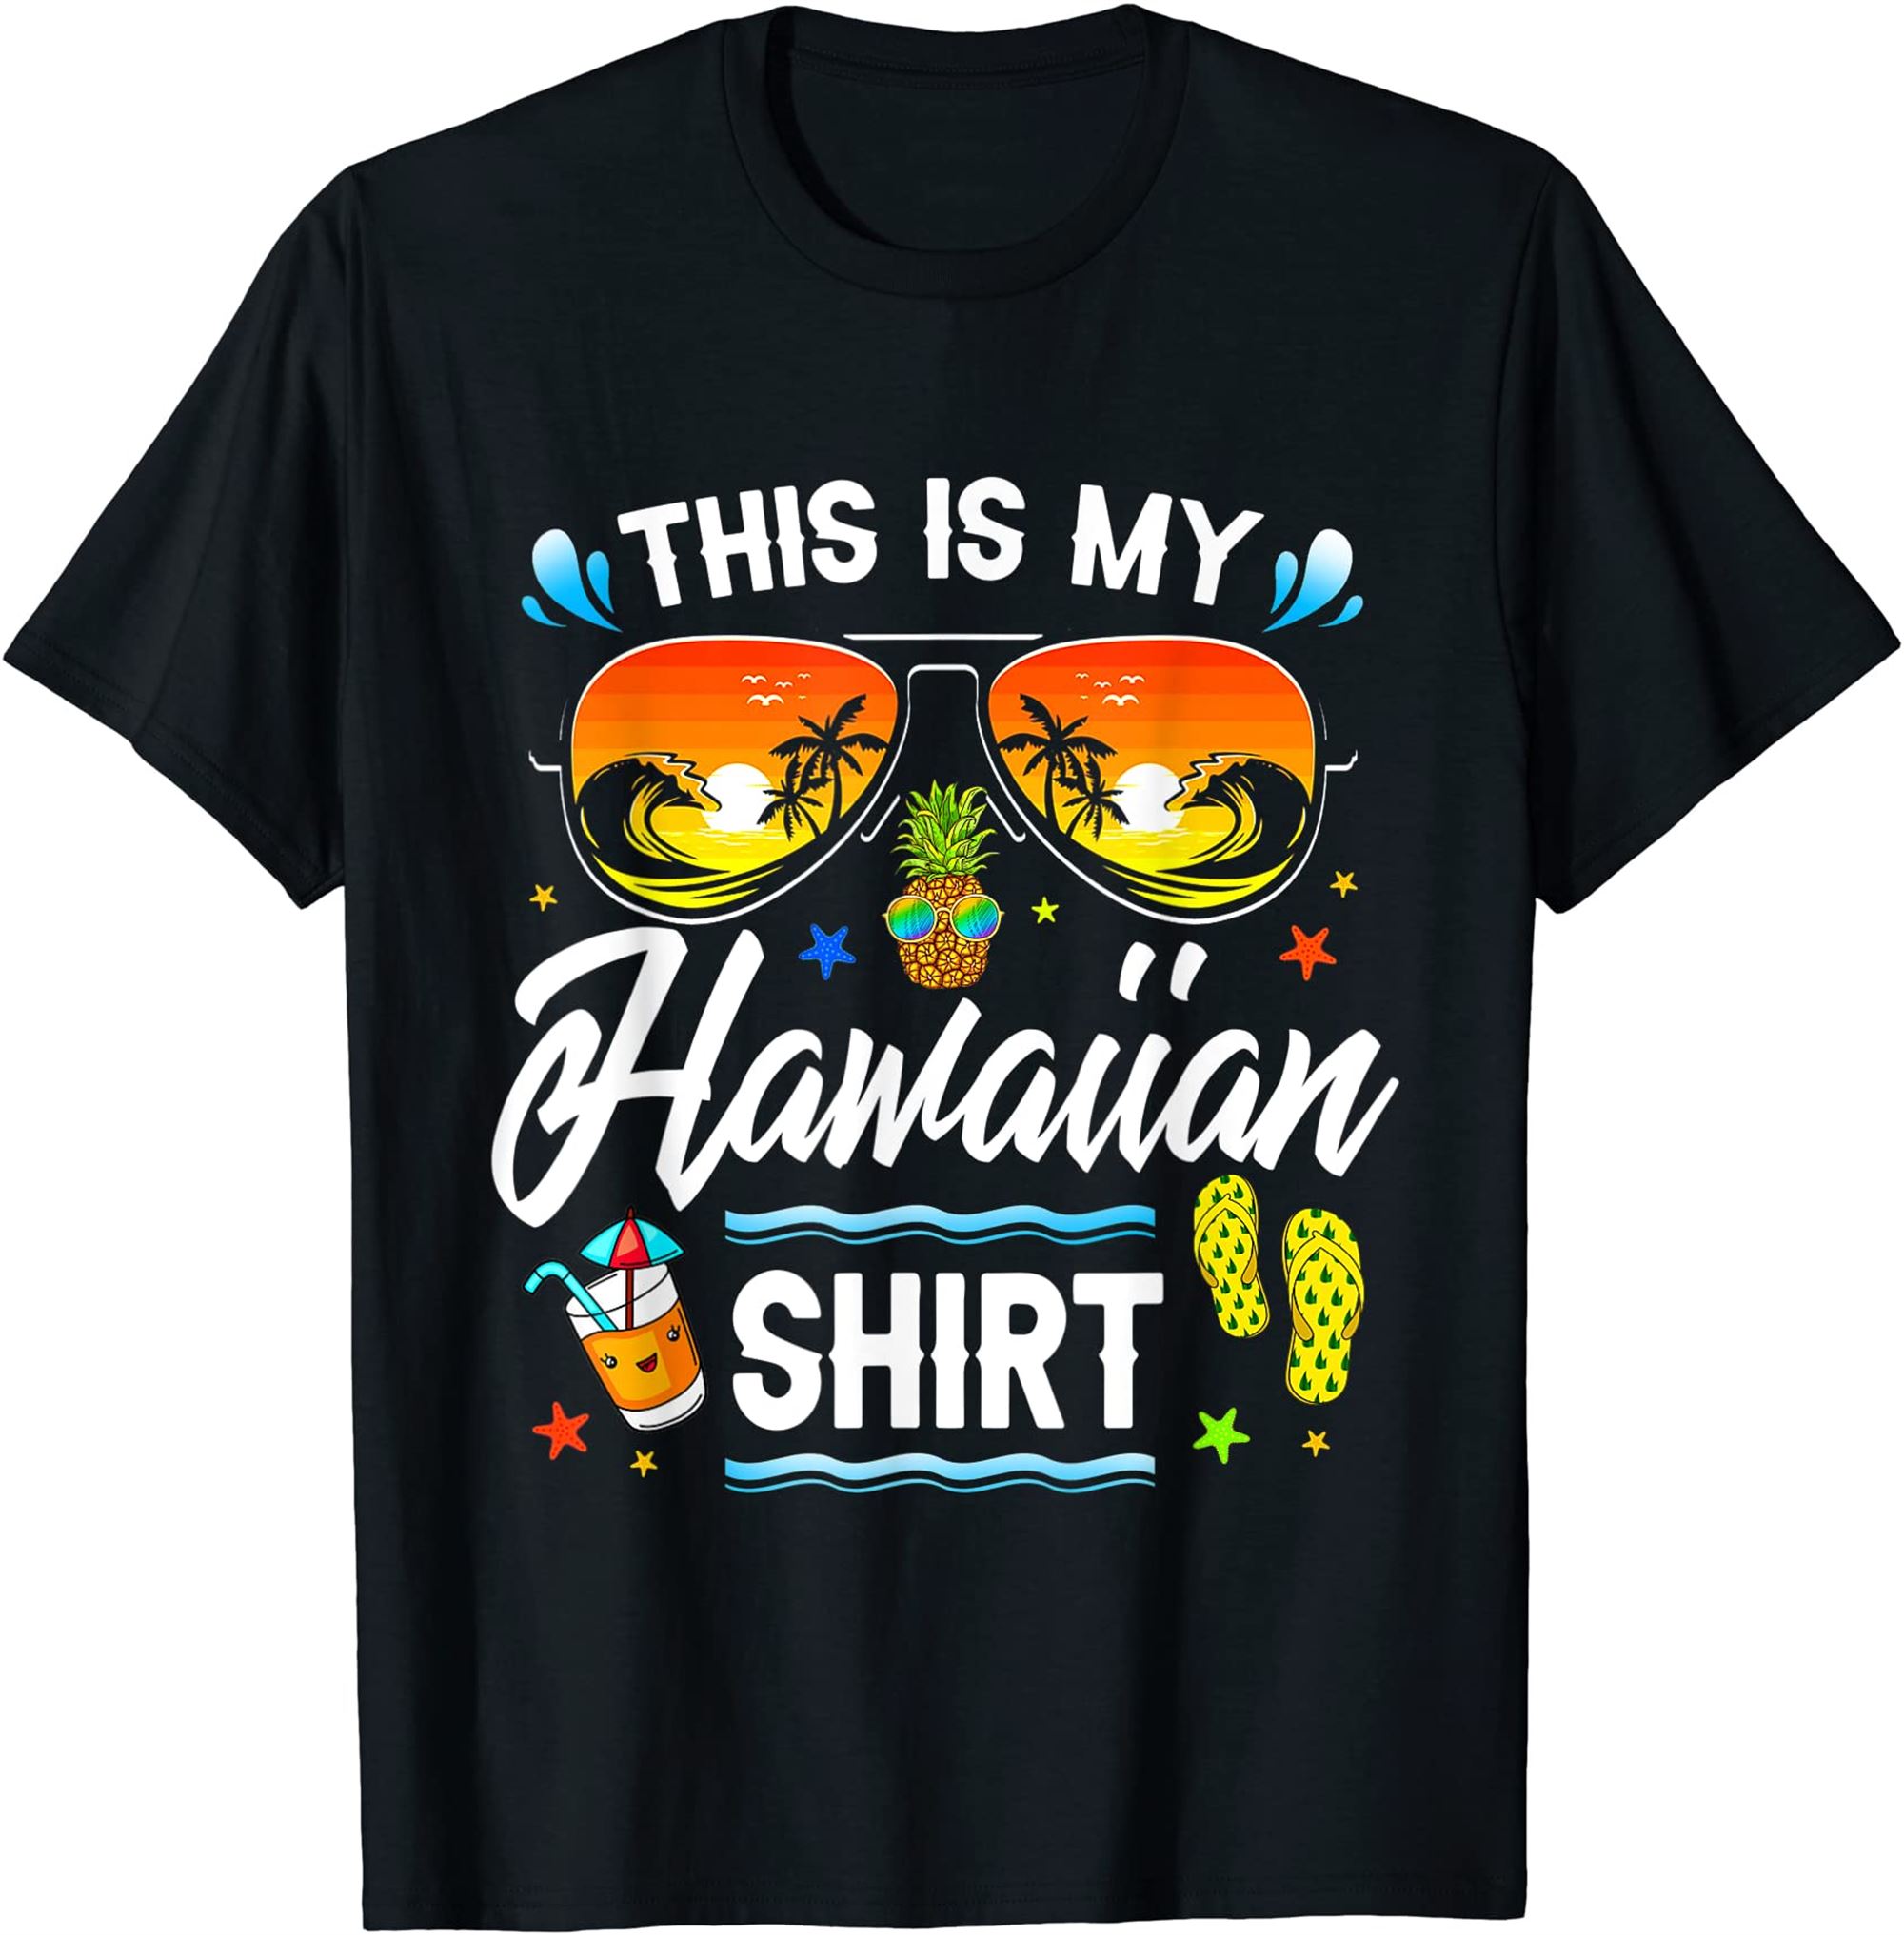 This Is My Hawaiian Shirt Luau Aloha Hawaii Beach Pineapple T-shirt Full Size Up To 5xl